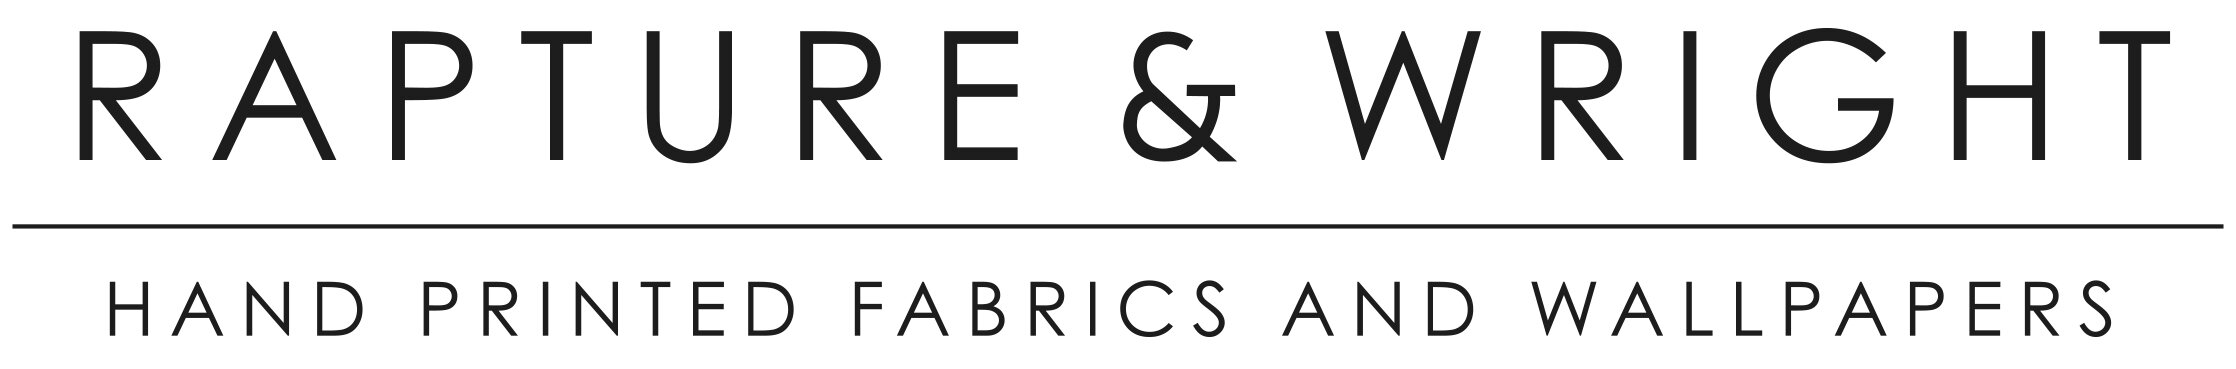 Rapture & Wright logo 2017.jpg